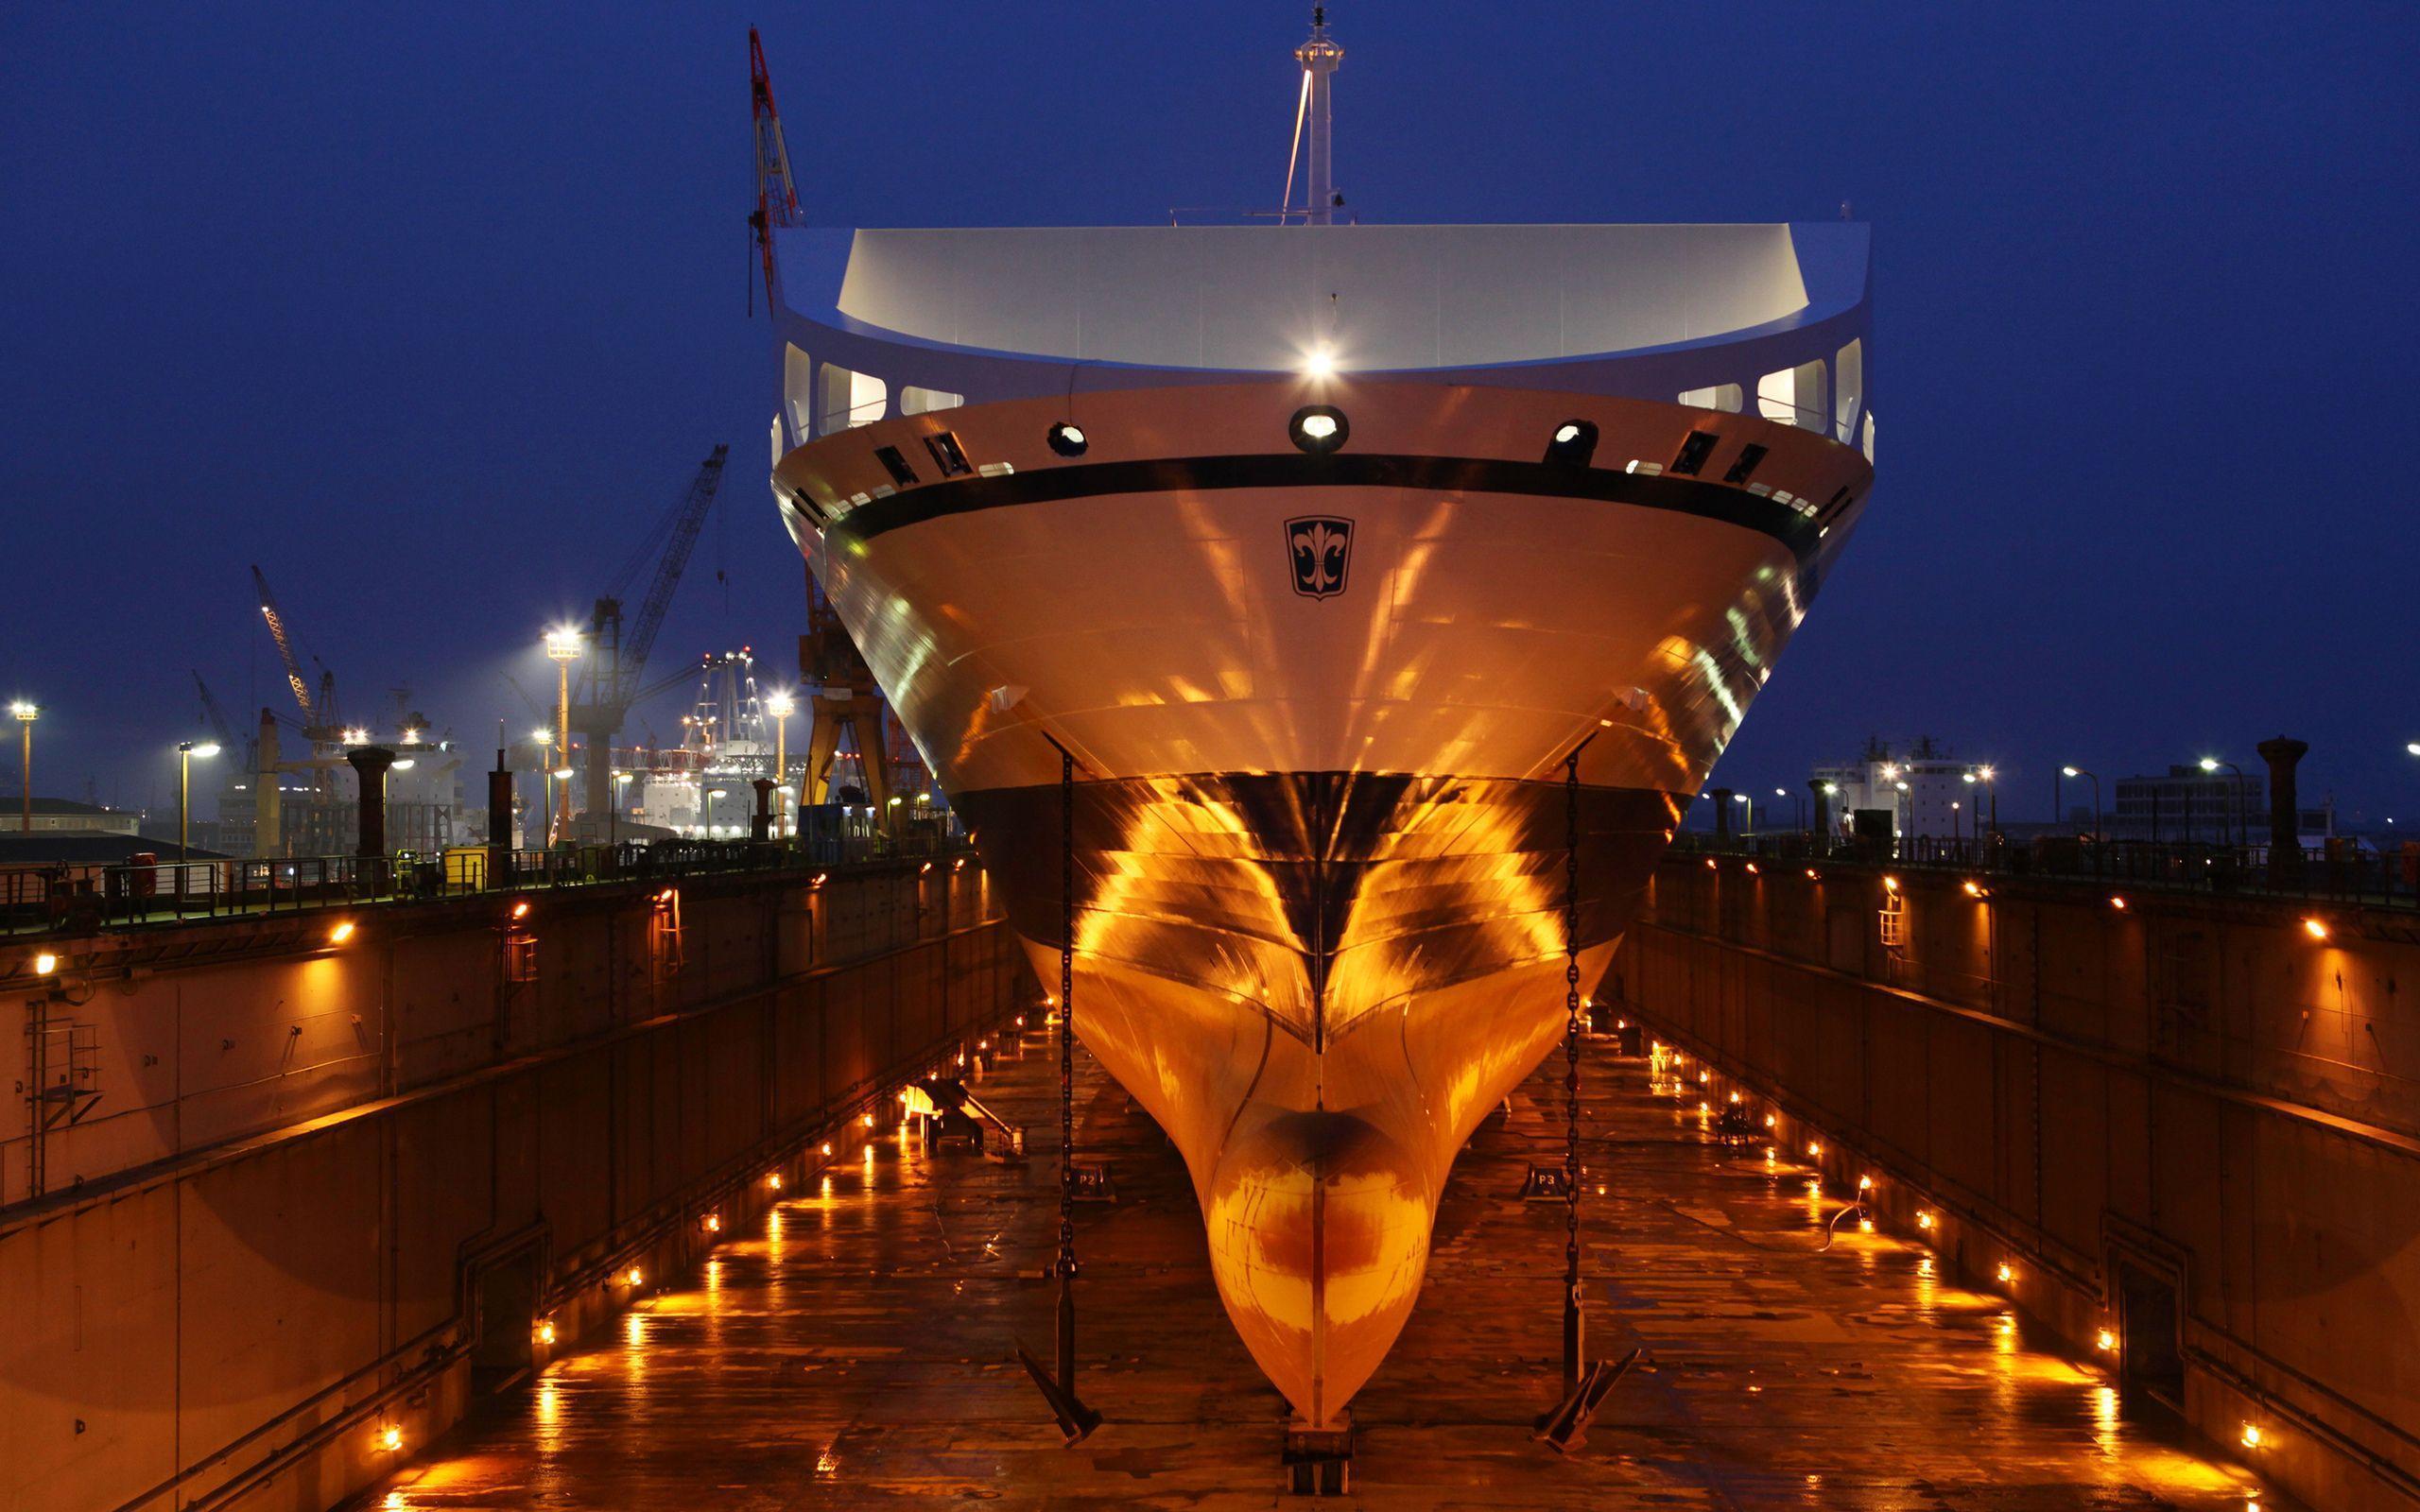 Bore sea port night ship vessel anchores dock lights dry dock